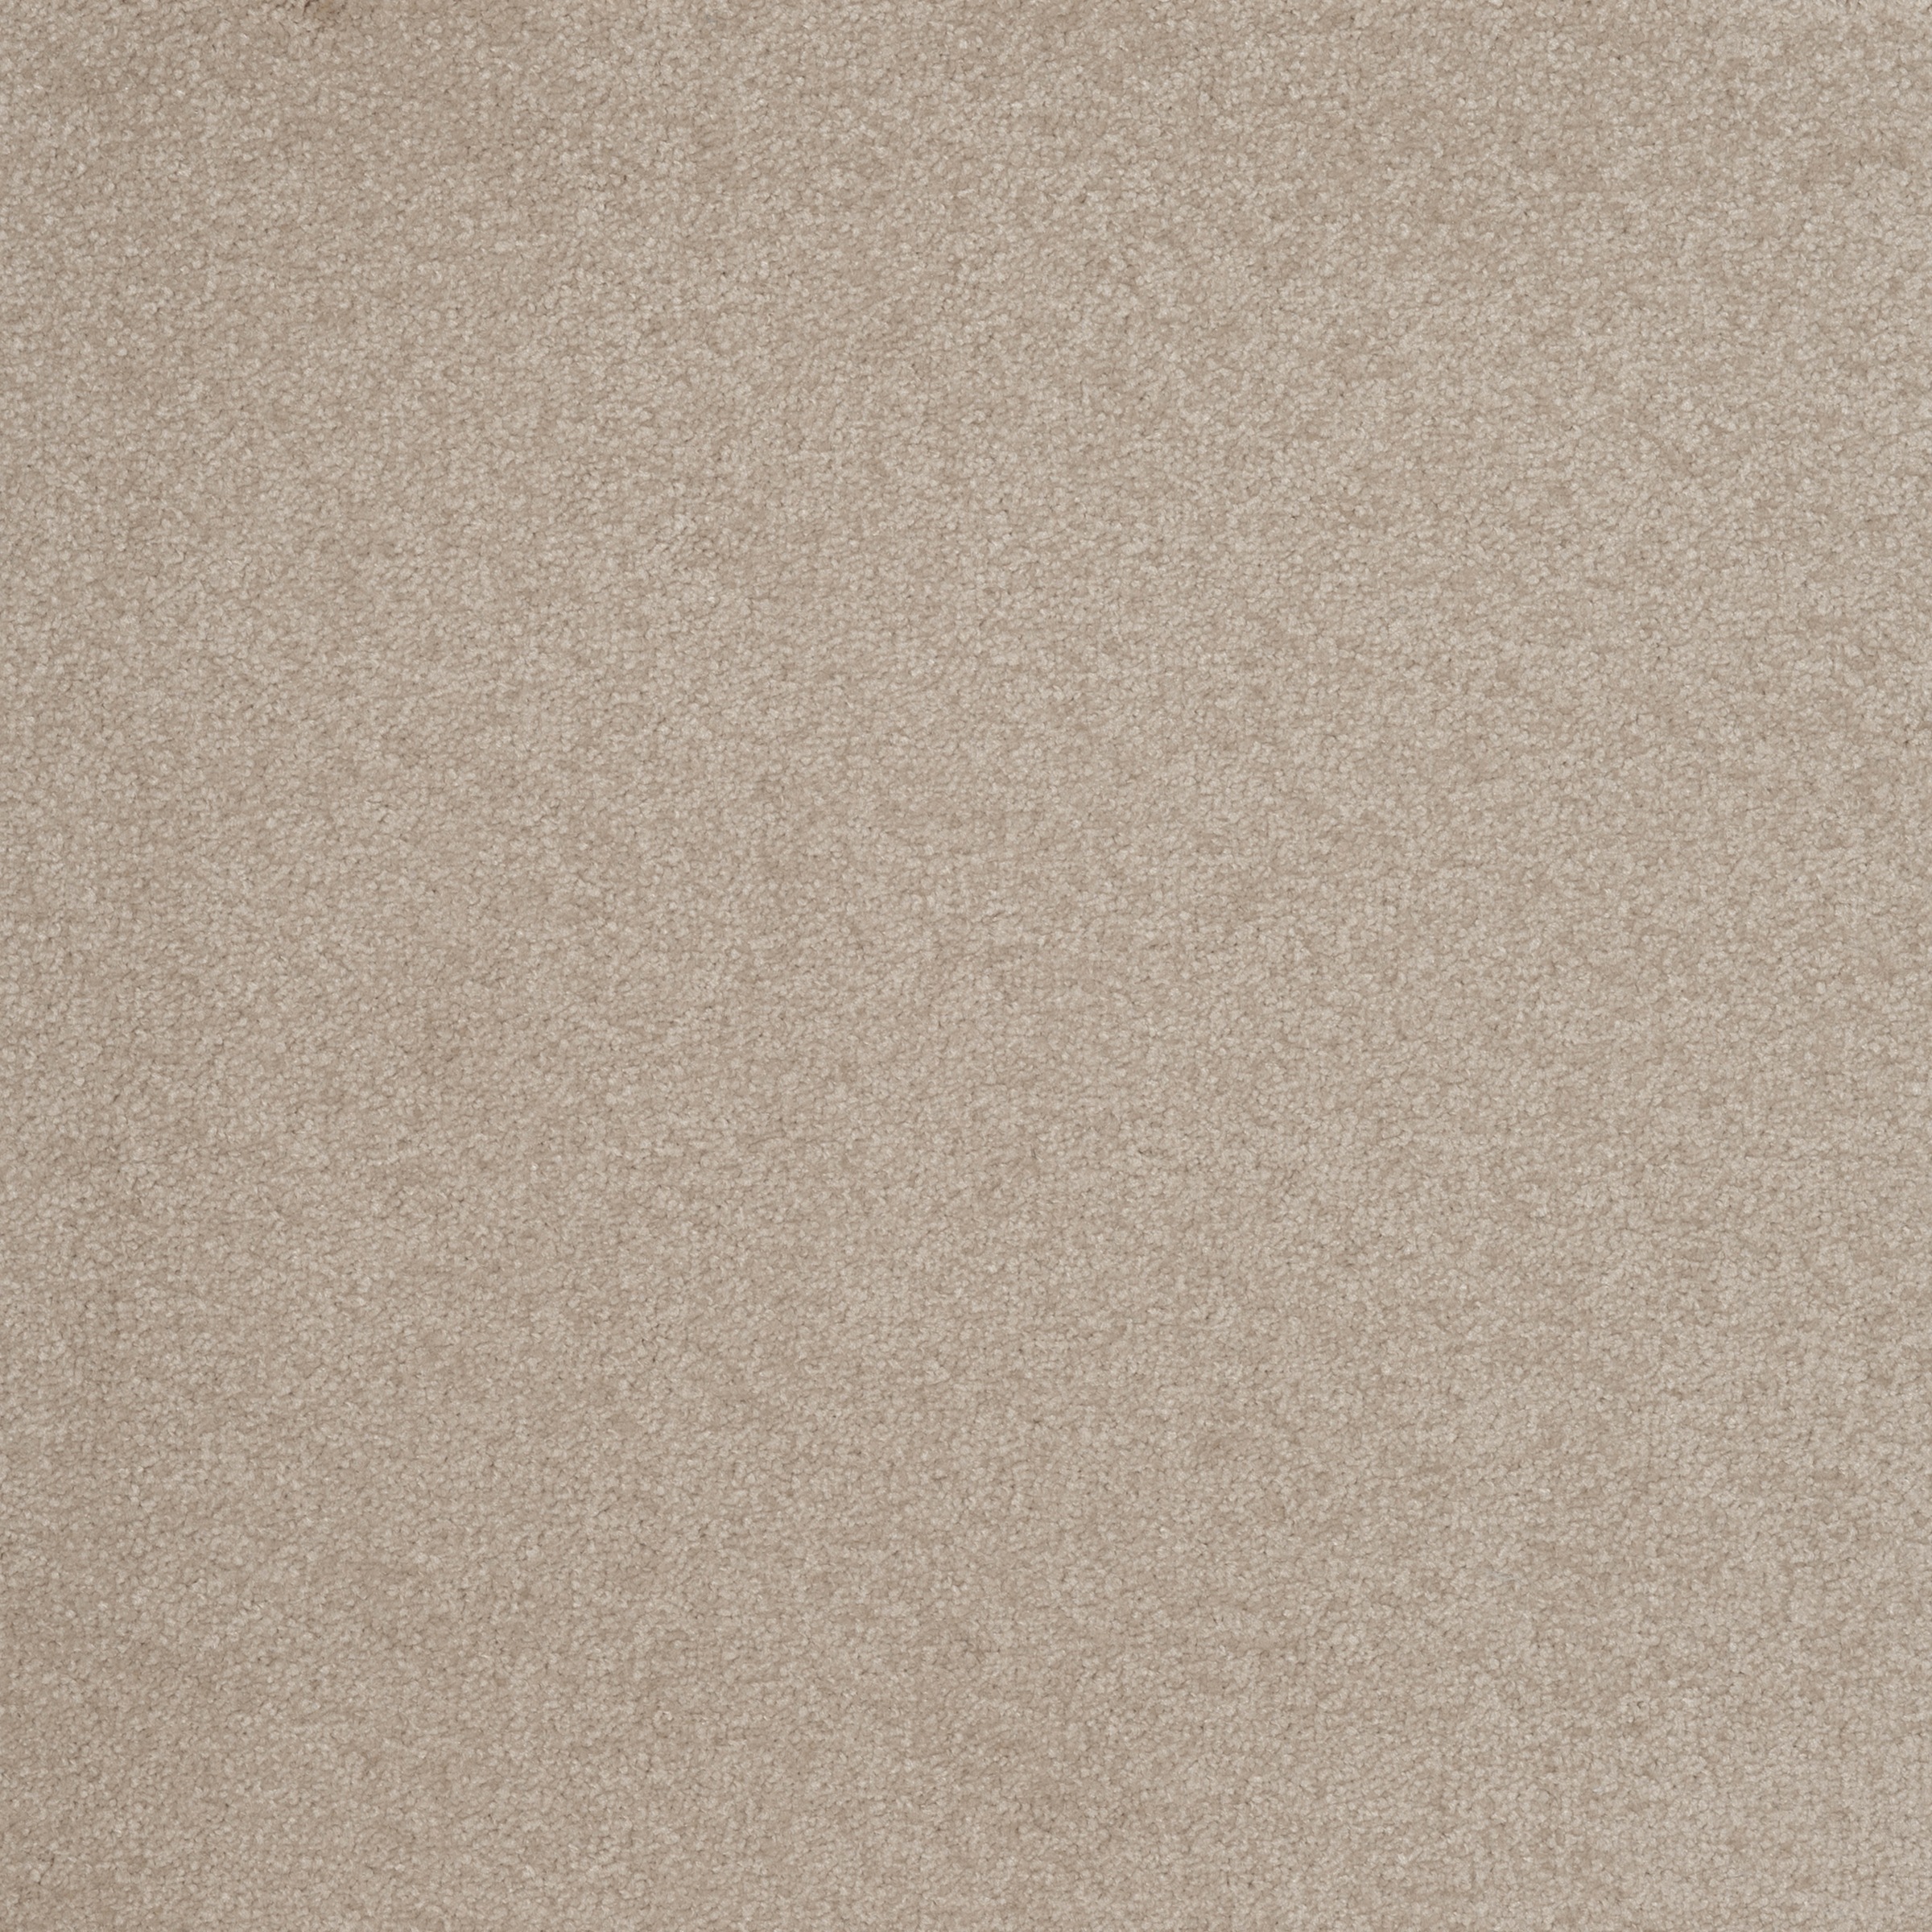 my home Teppichfliese "Capri", quadratisch, selbstliegend, 4 oder 20 Stück, 50 x 50cm, Fliese, Bodenbelag